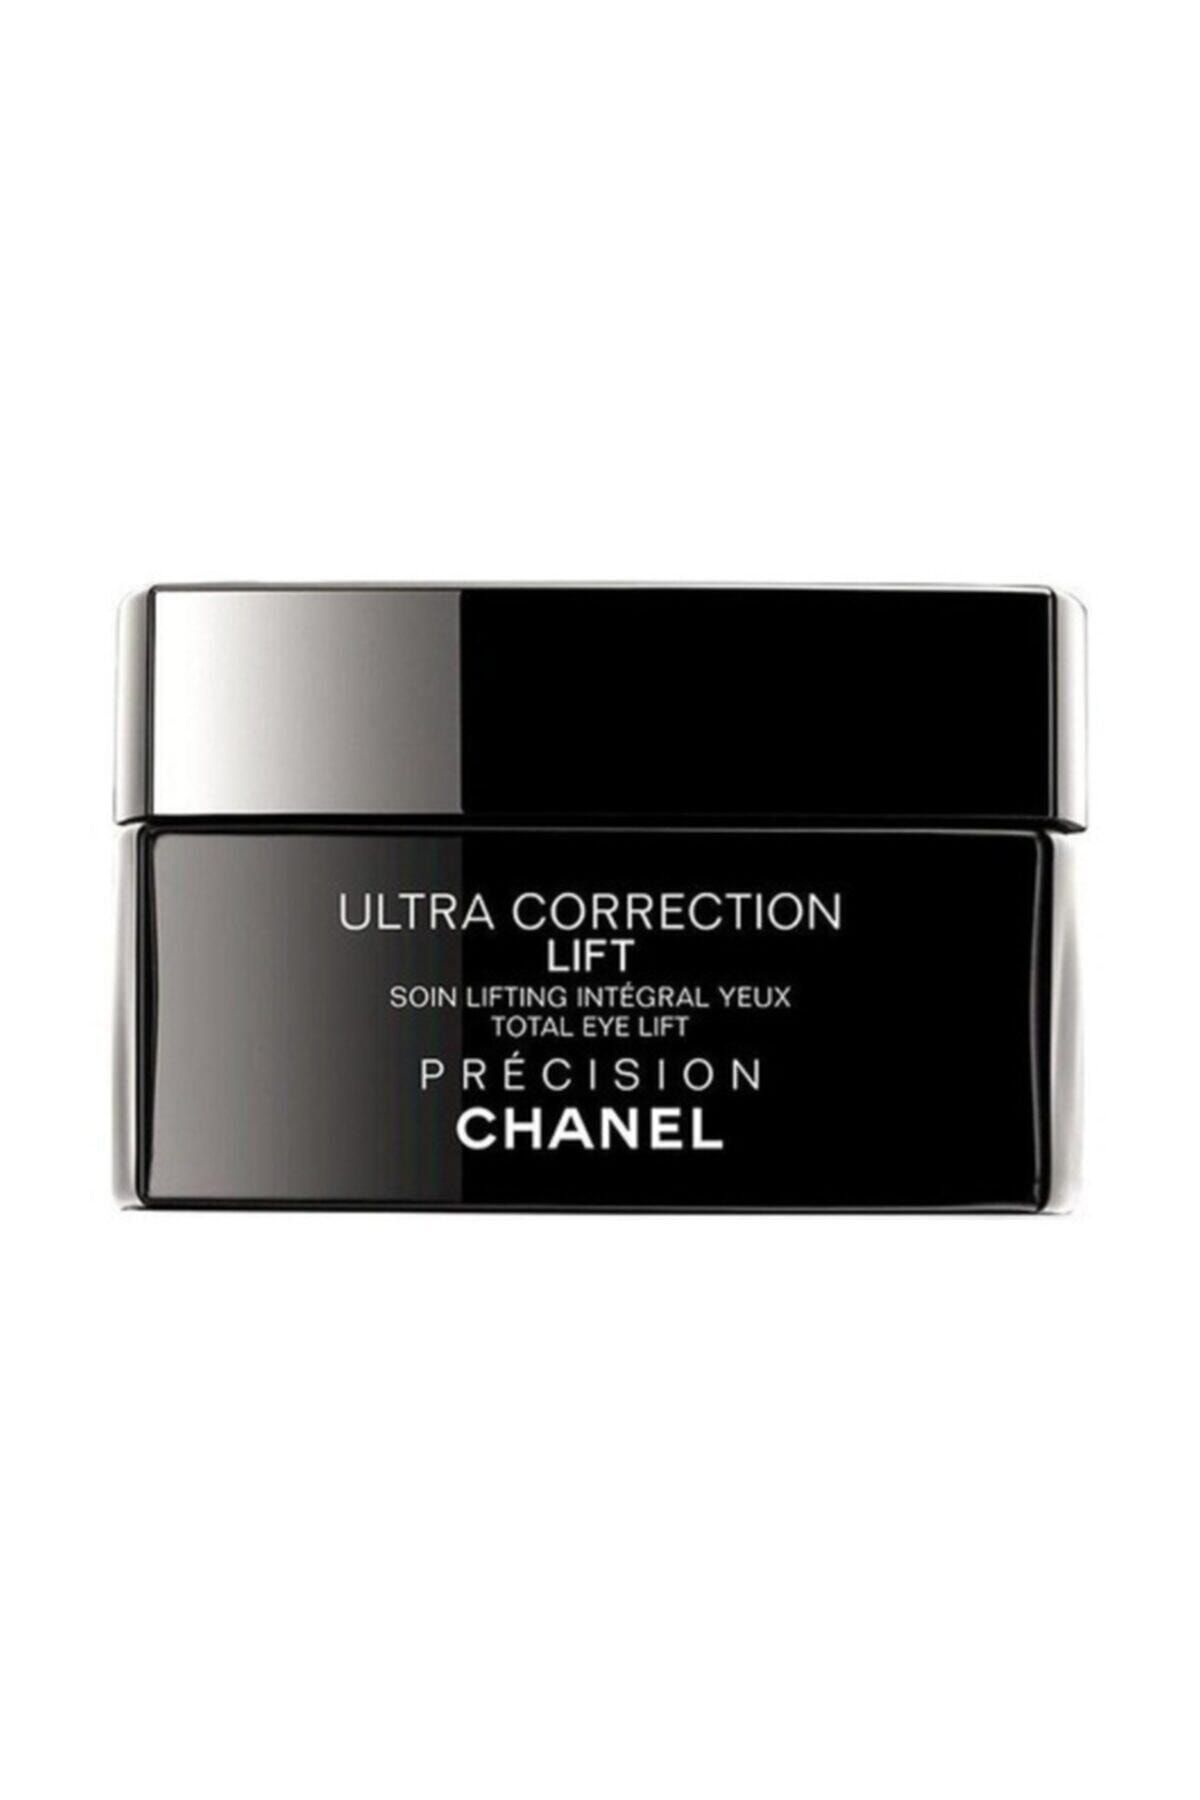 Chanel Ultra Correction Lift Precision Yeux Göz Kremi 15 Ml.